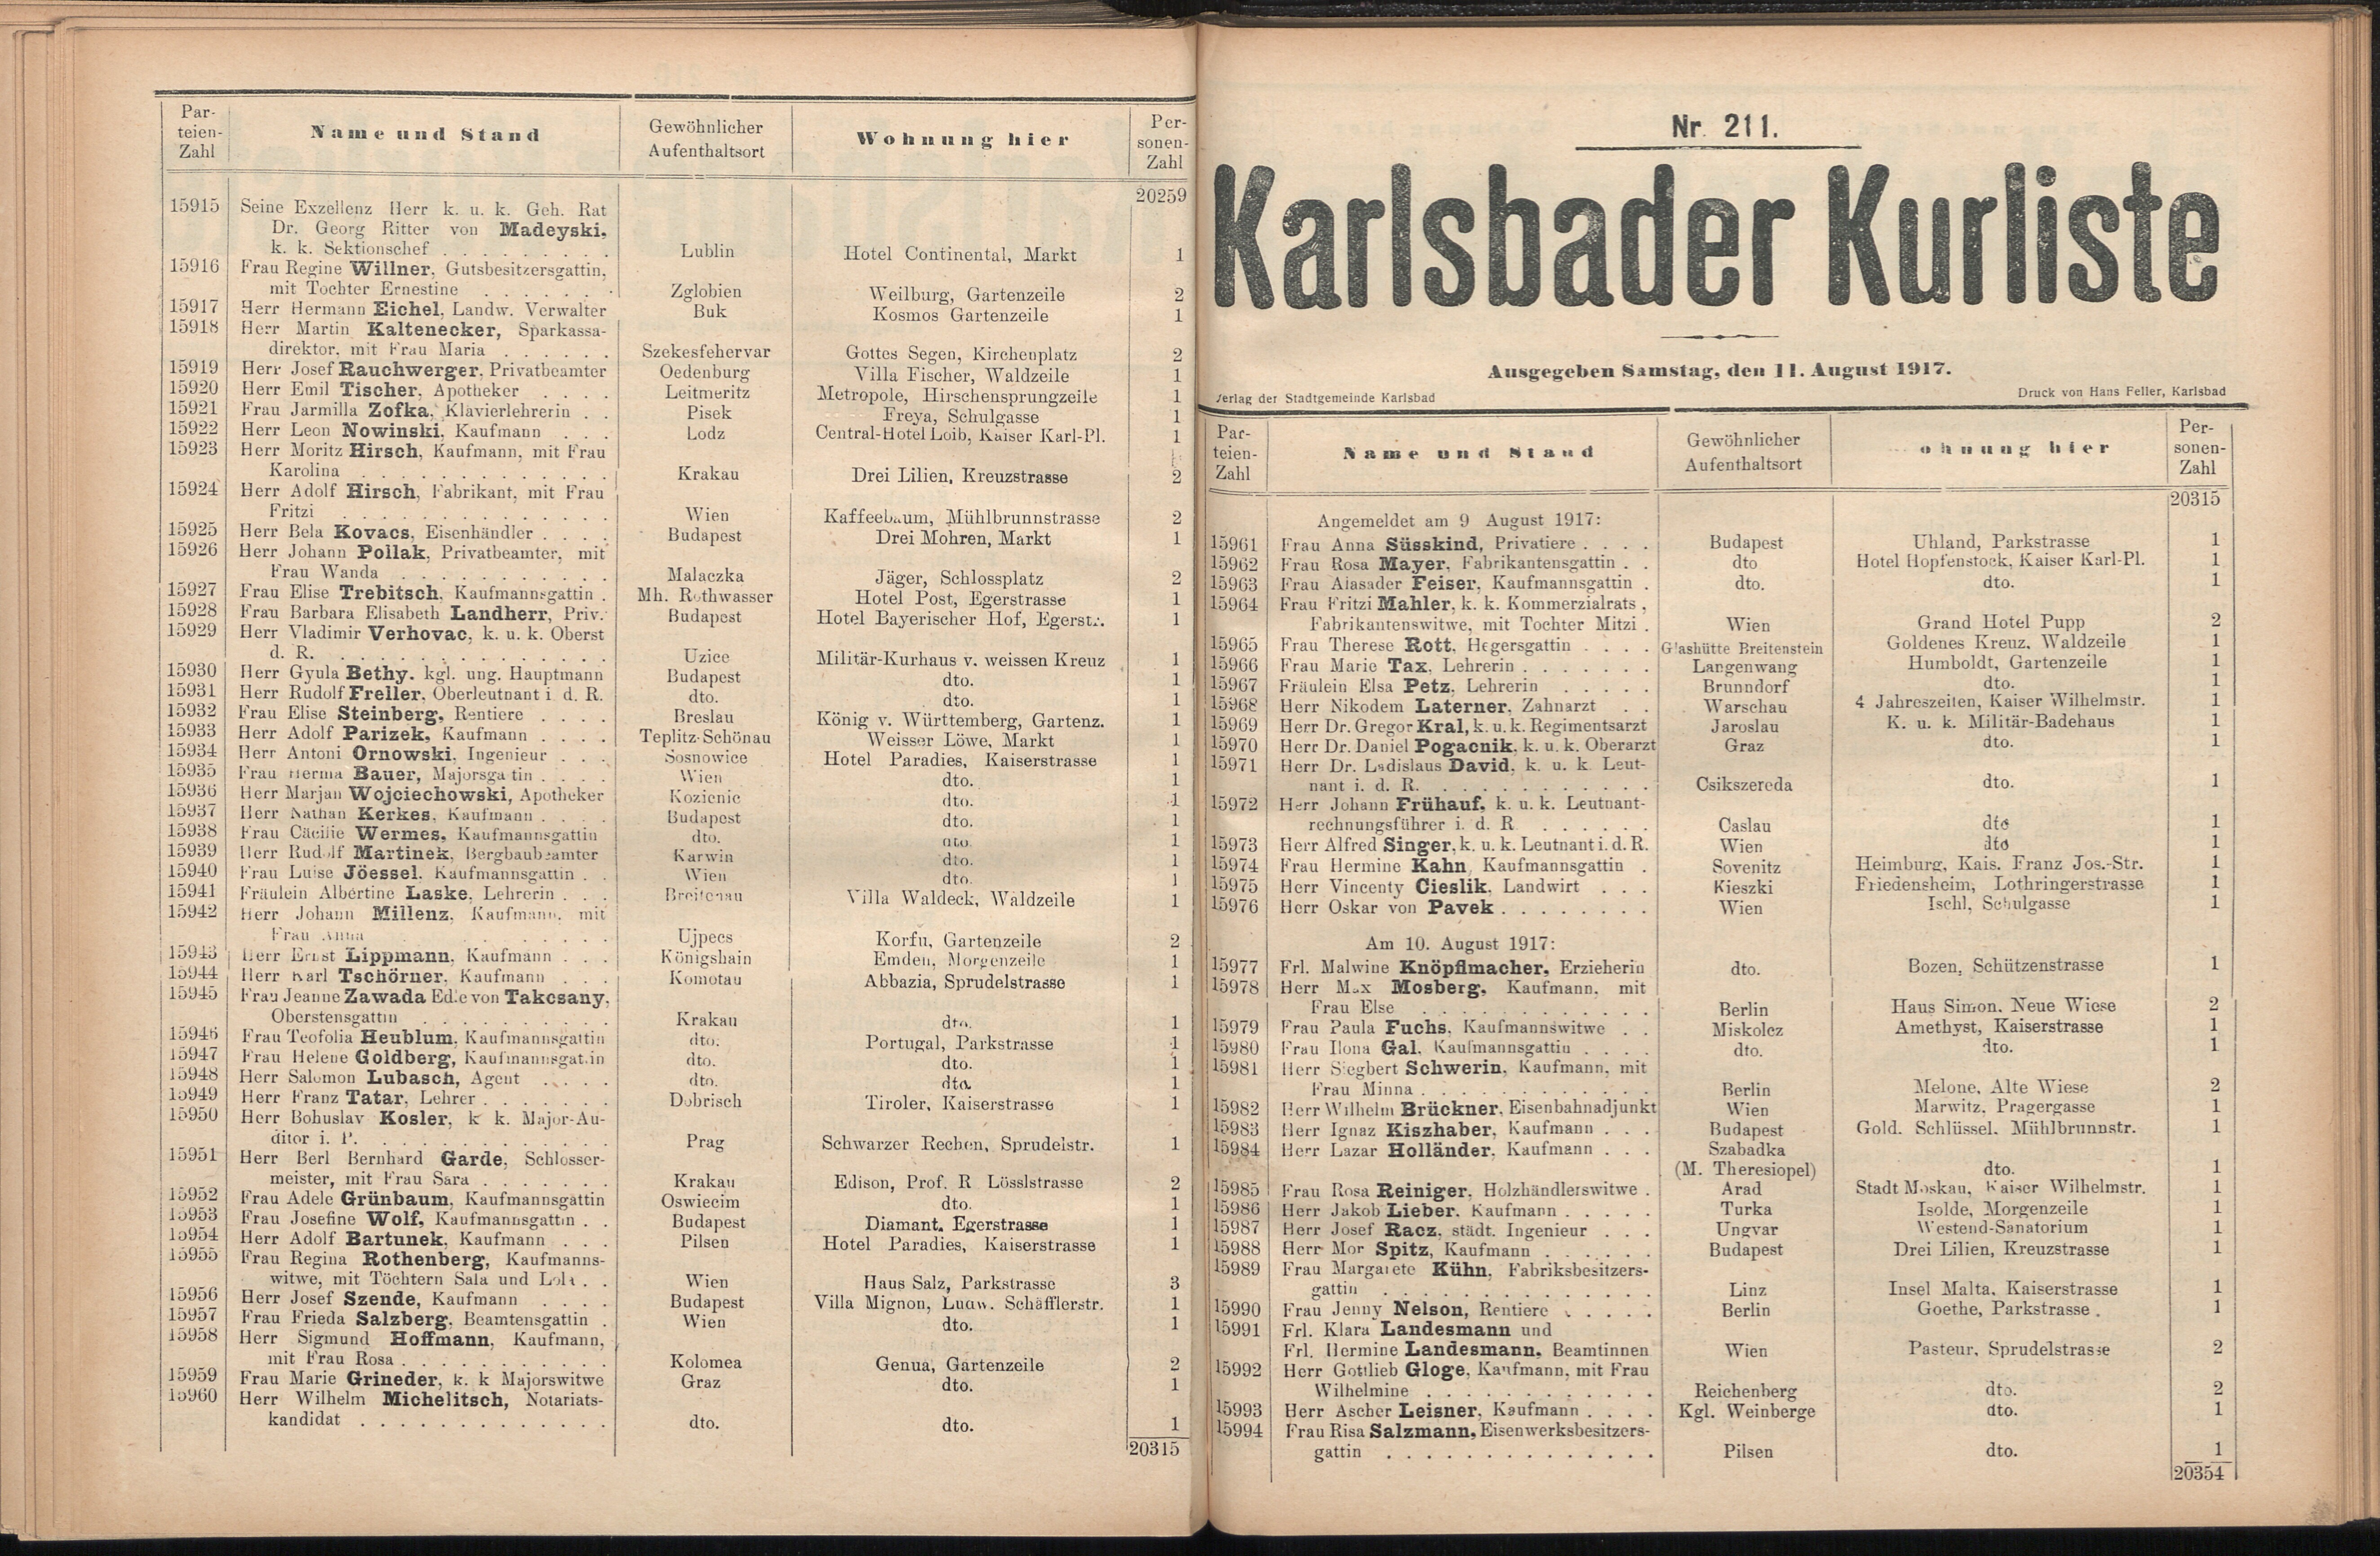 261. soap-kv_knihovna_karlsbader-kurliste-1917_2610